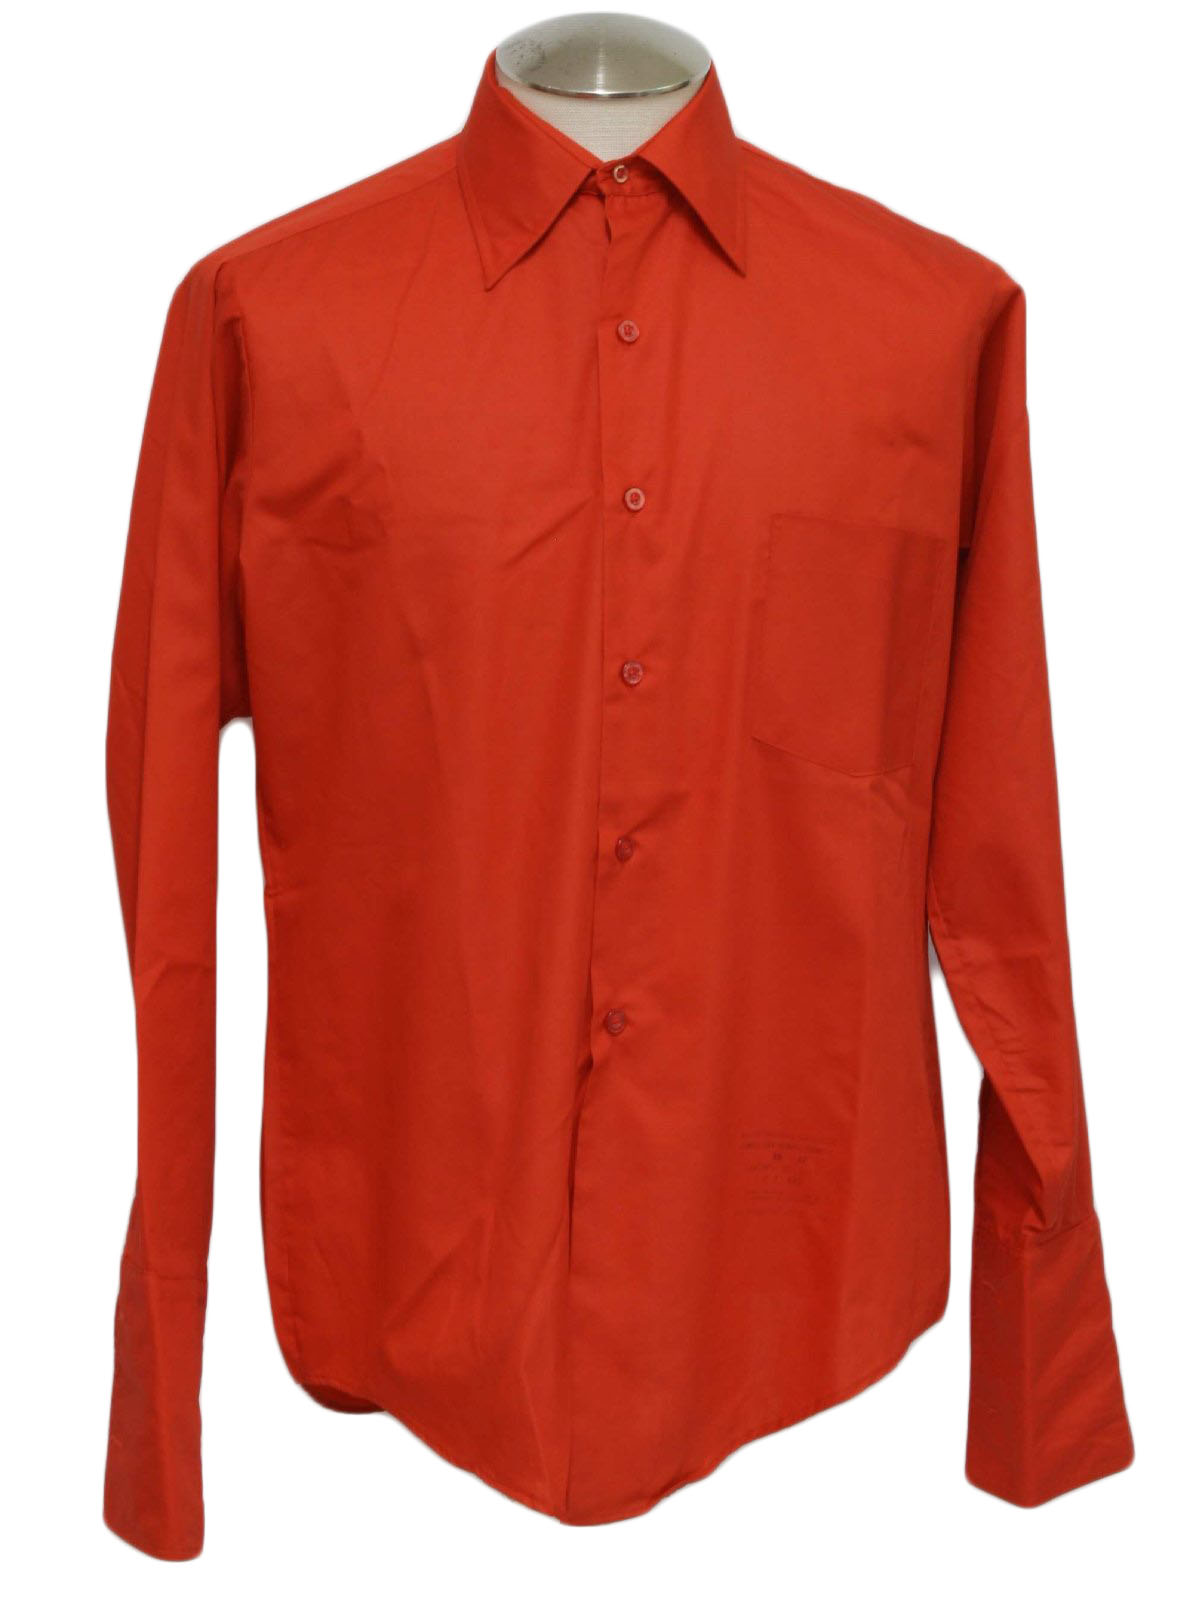 Vintage Van Heusen Sixties Shirt: Late 60s or early 70s -Van Heusen ...